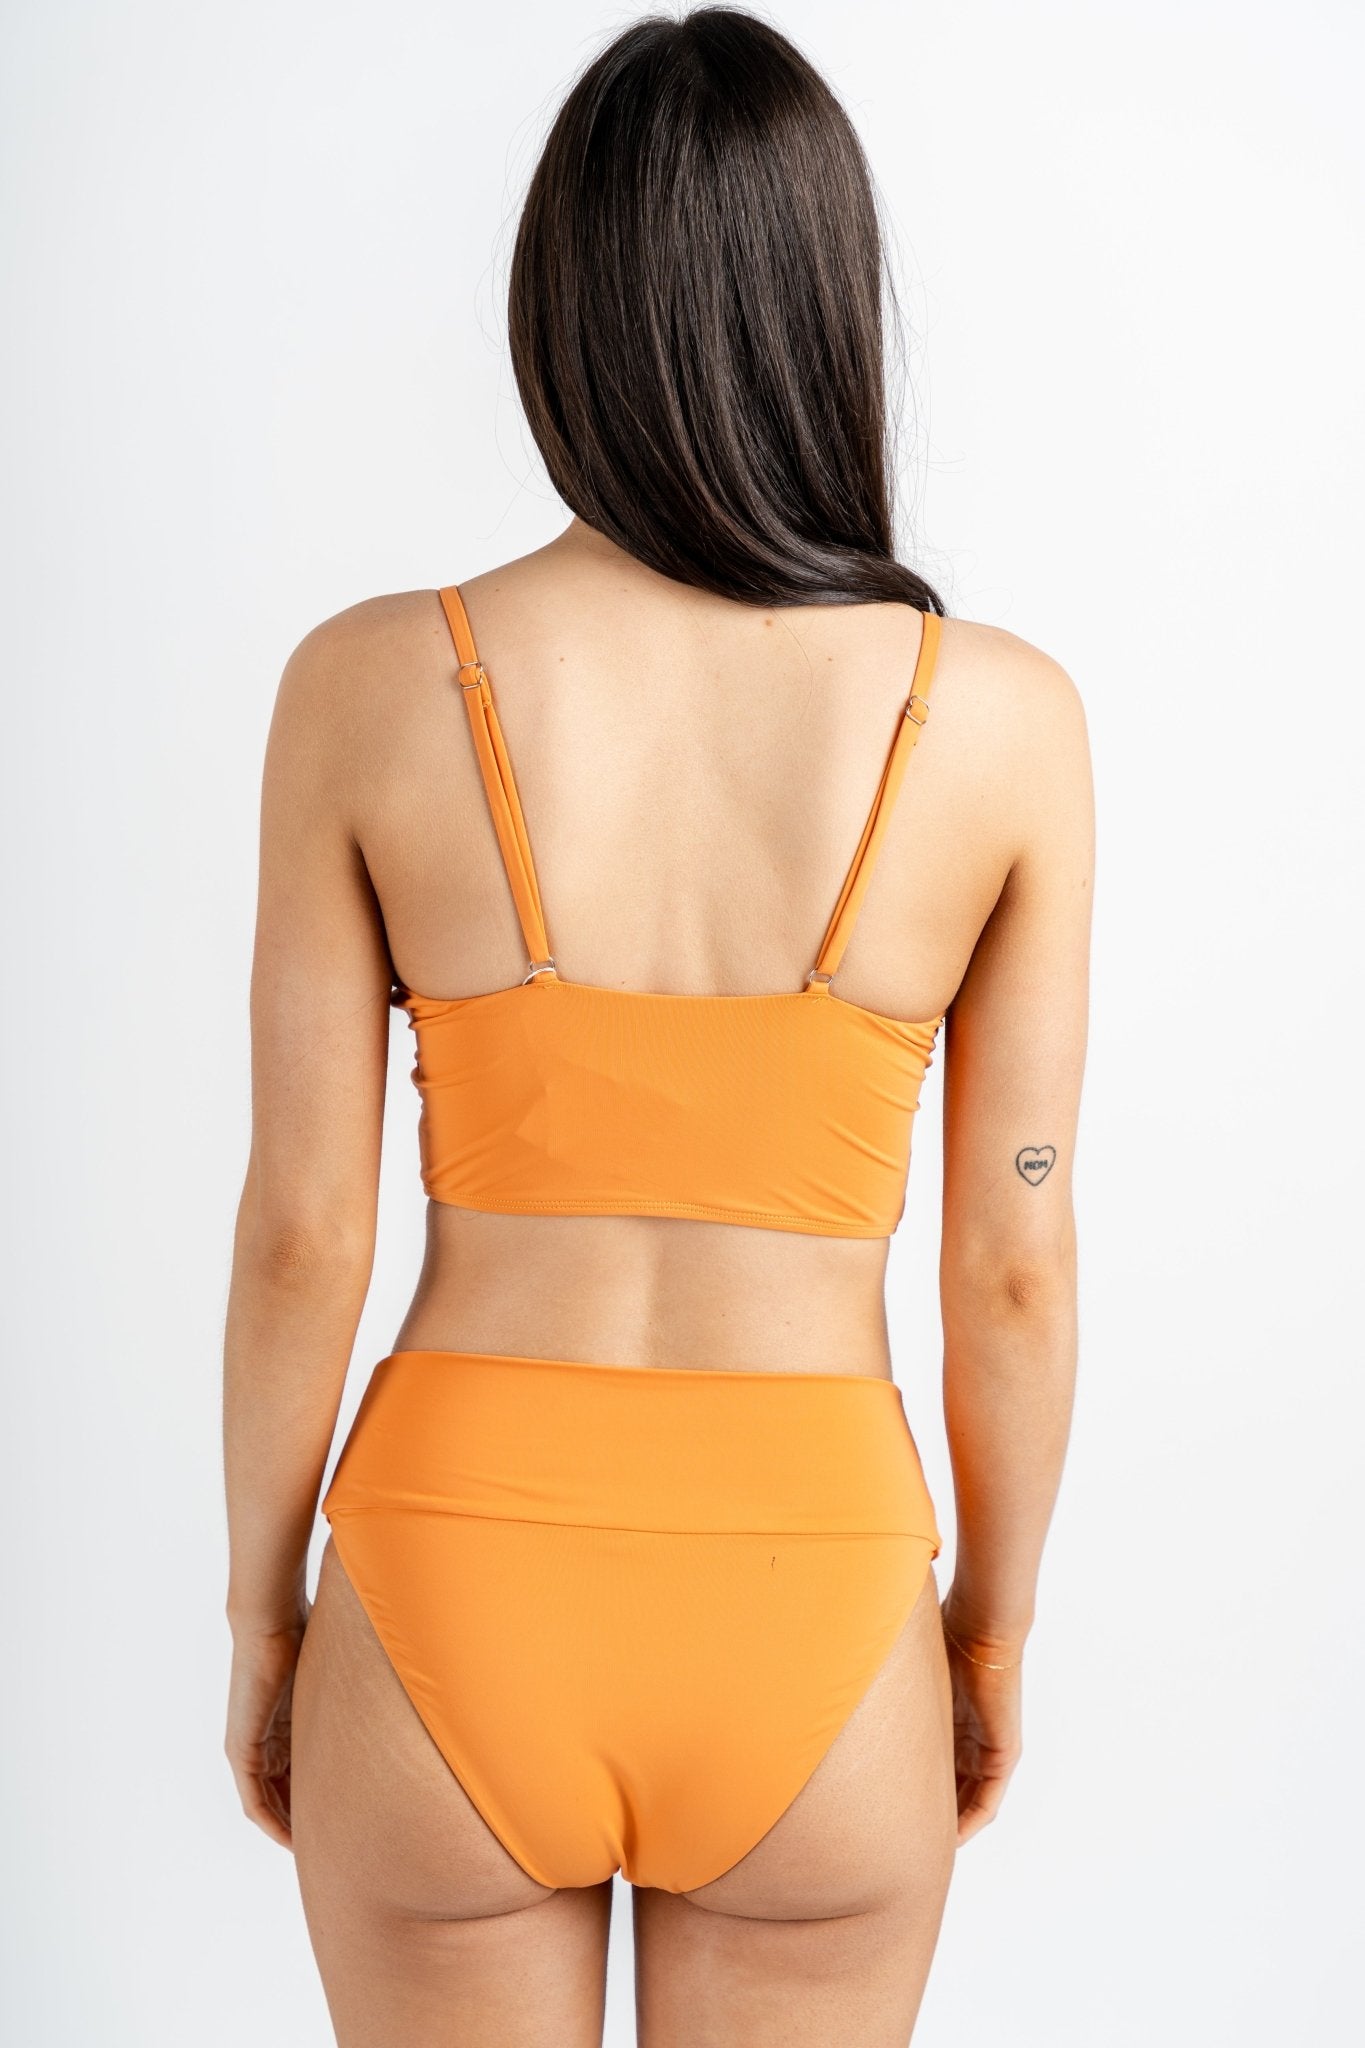 Tangerine Activewear Tops for Women for sale